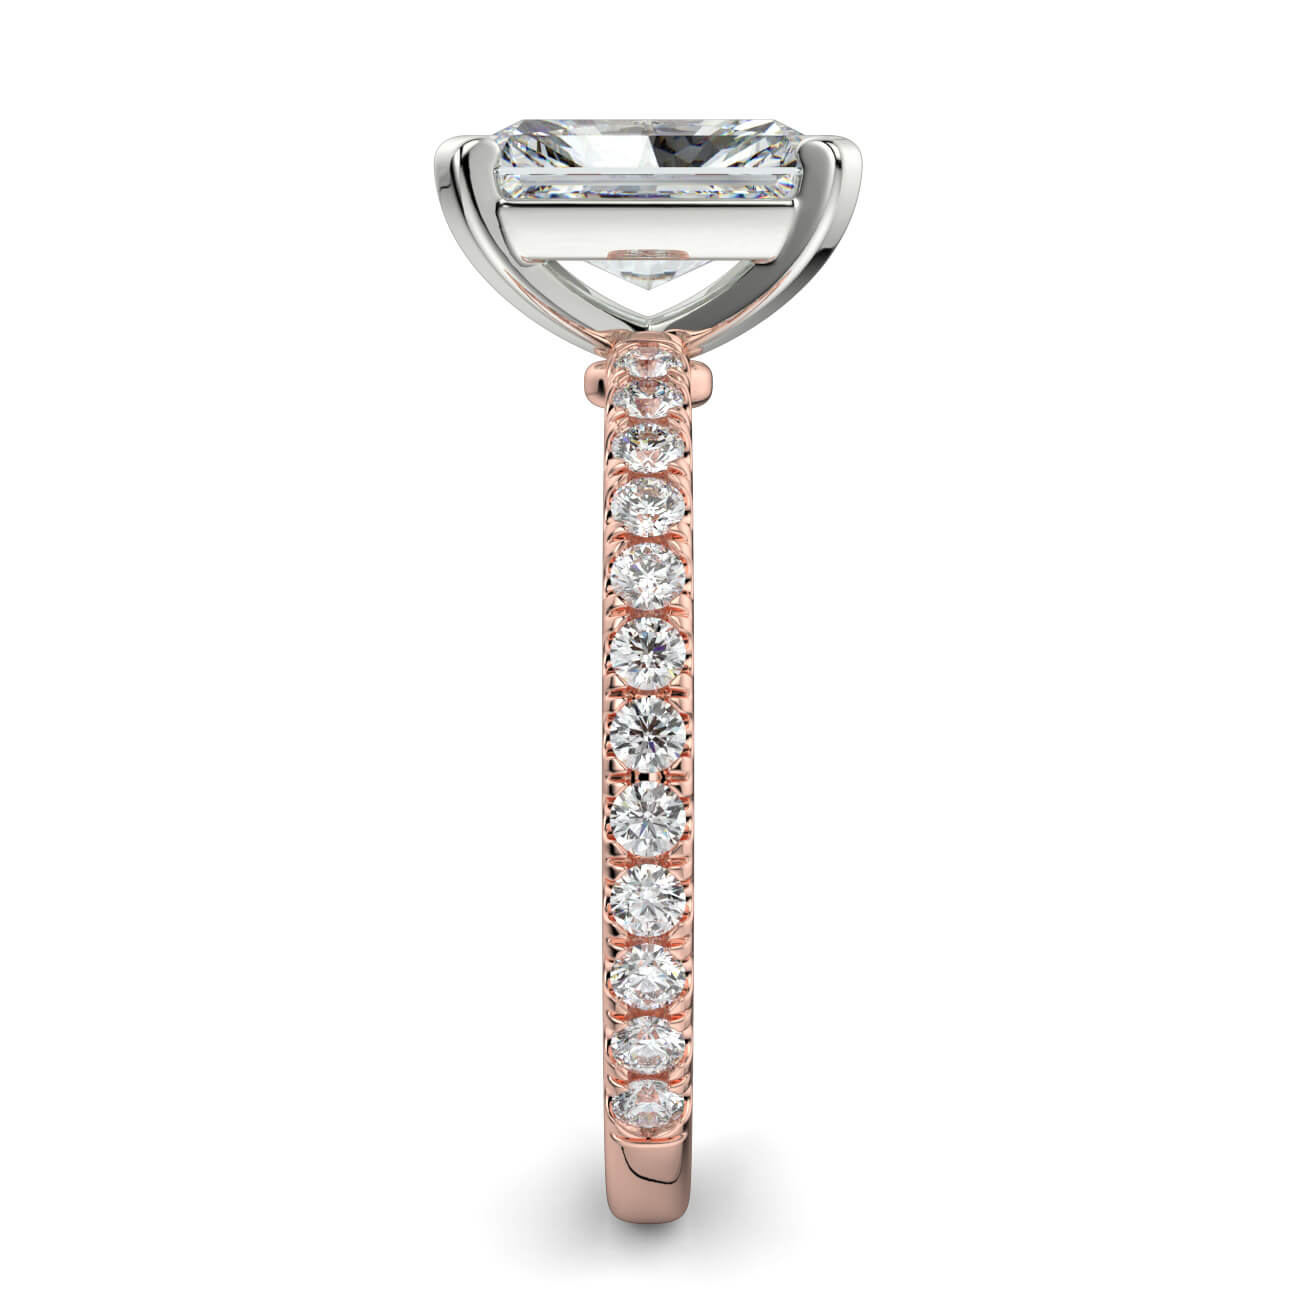 Delicate ‘Liat’ Radiant Cut Diamond Engagement Ring in 18k Rose and White Gold – Australian Diamond Network